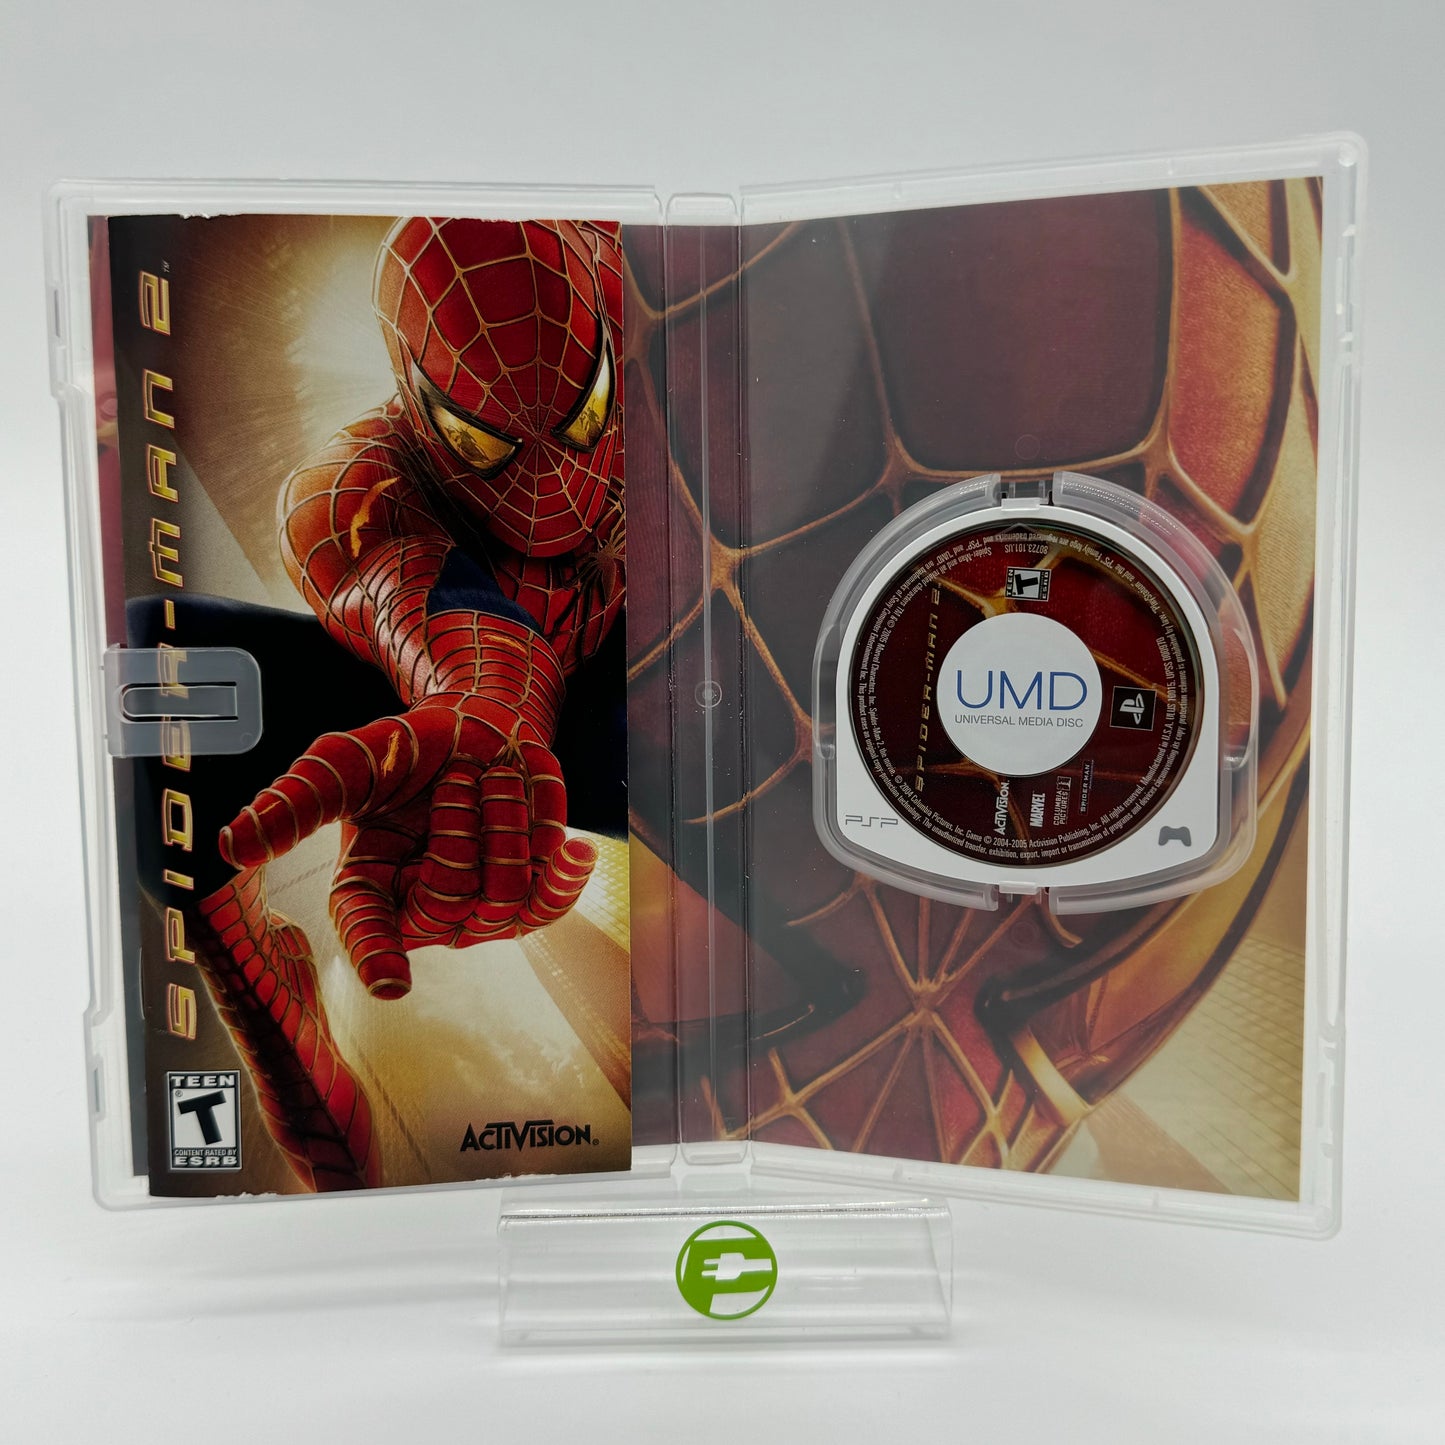 Spiderman 2  (Sony PlayStation Portable PSP,  2005)